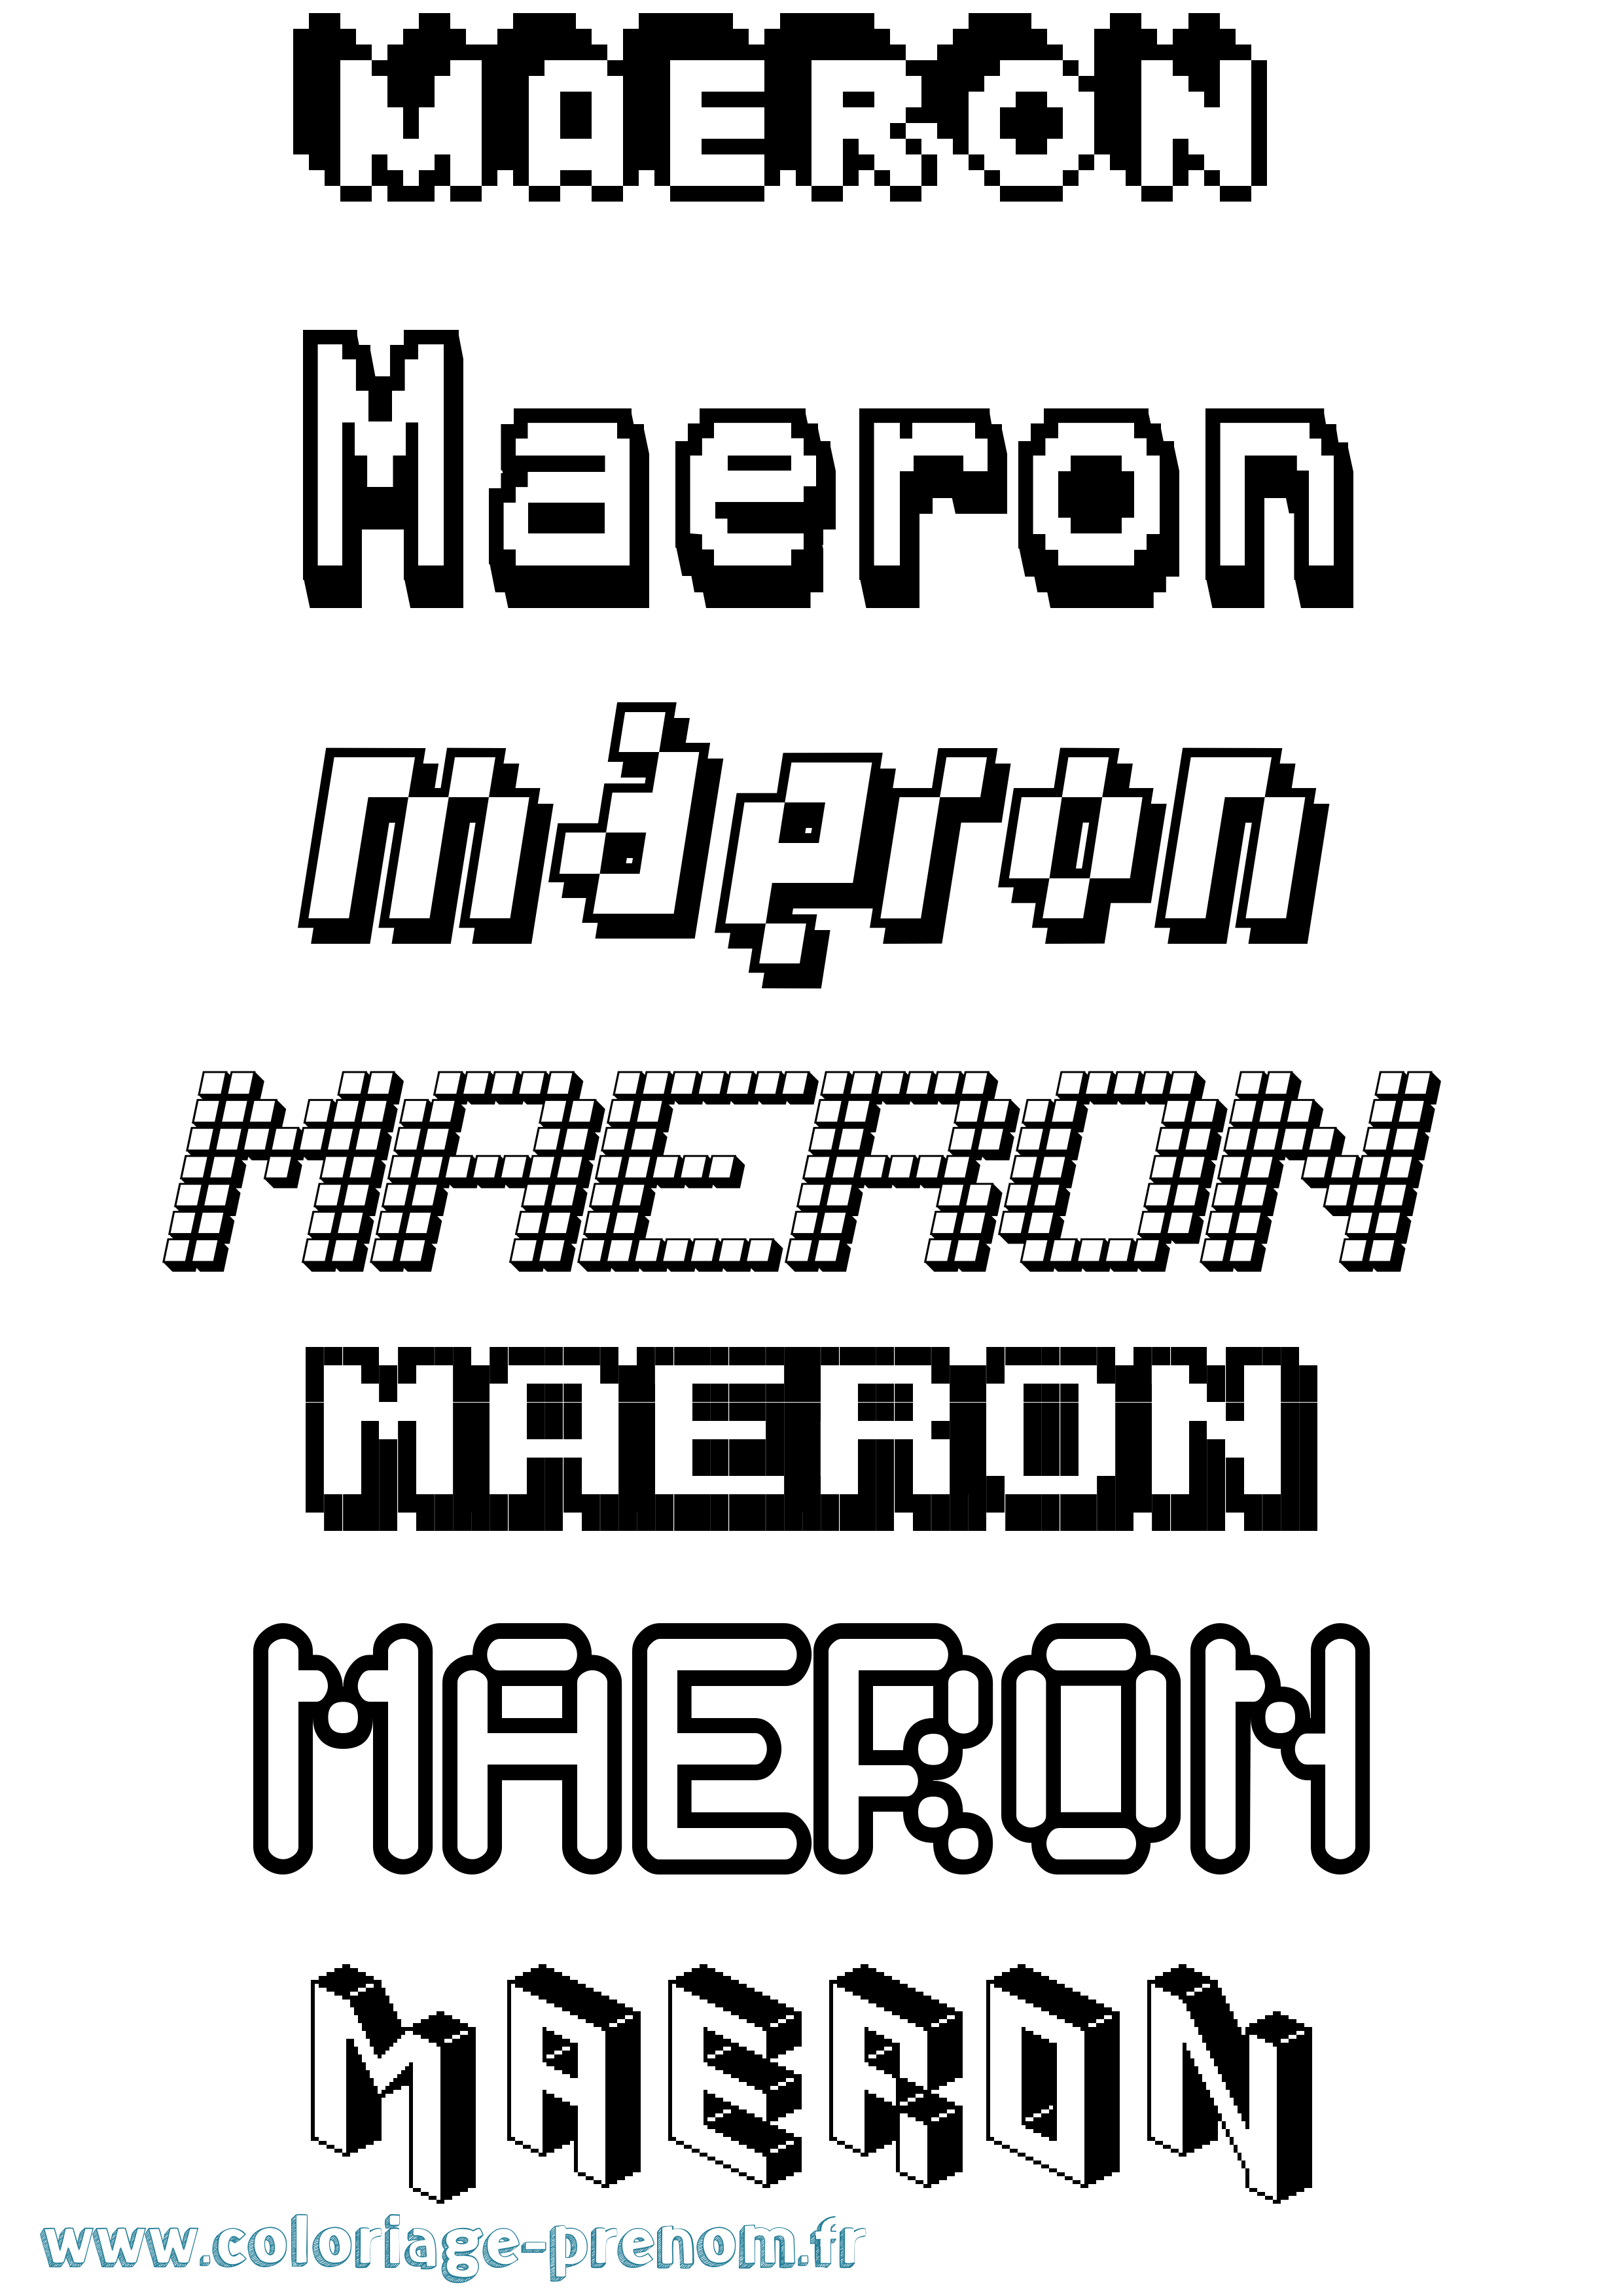 Coloriage prénom Maeron Pixel